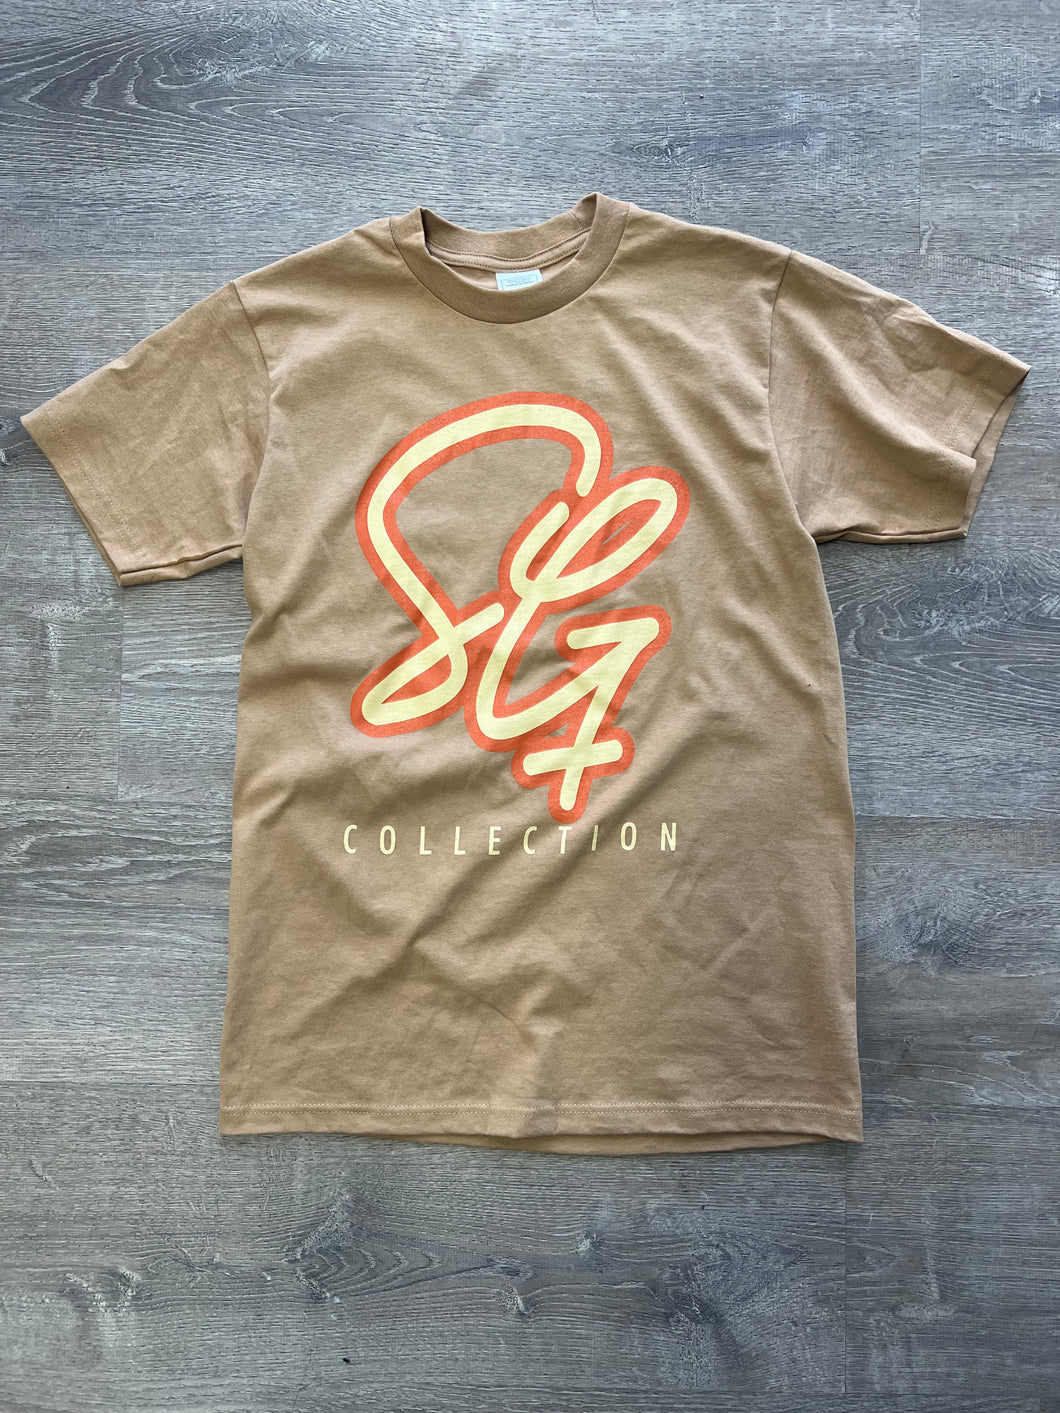 StyleGods SG Collection - Tan/Burnt Orange